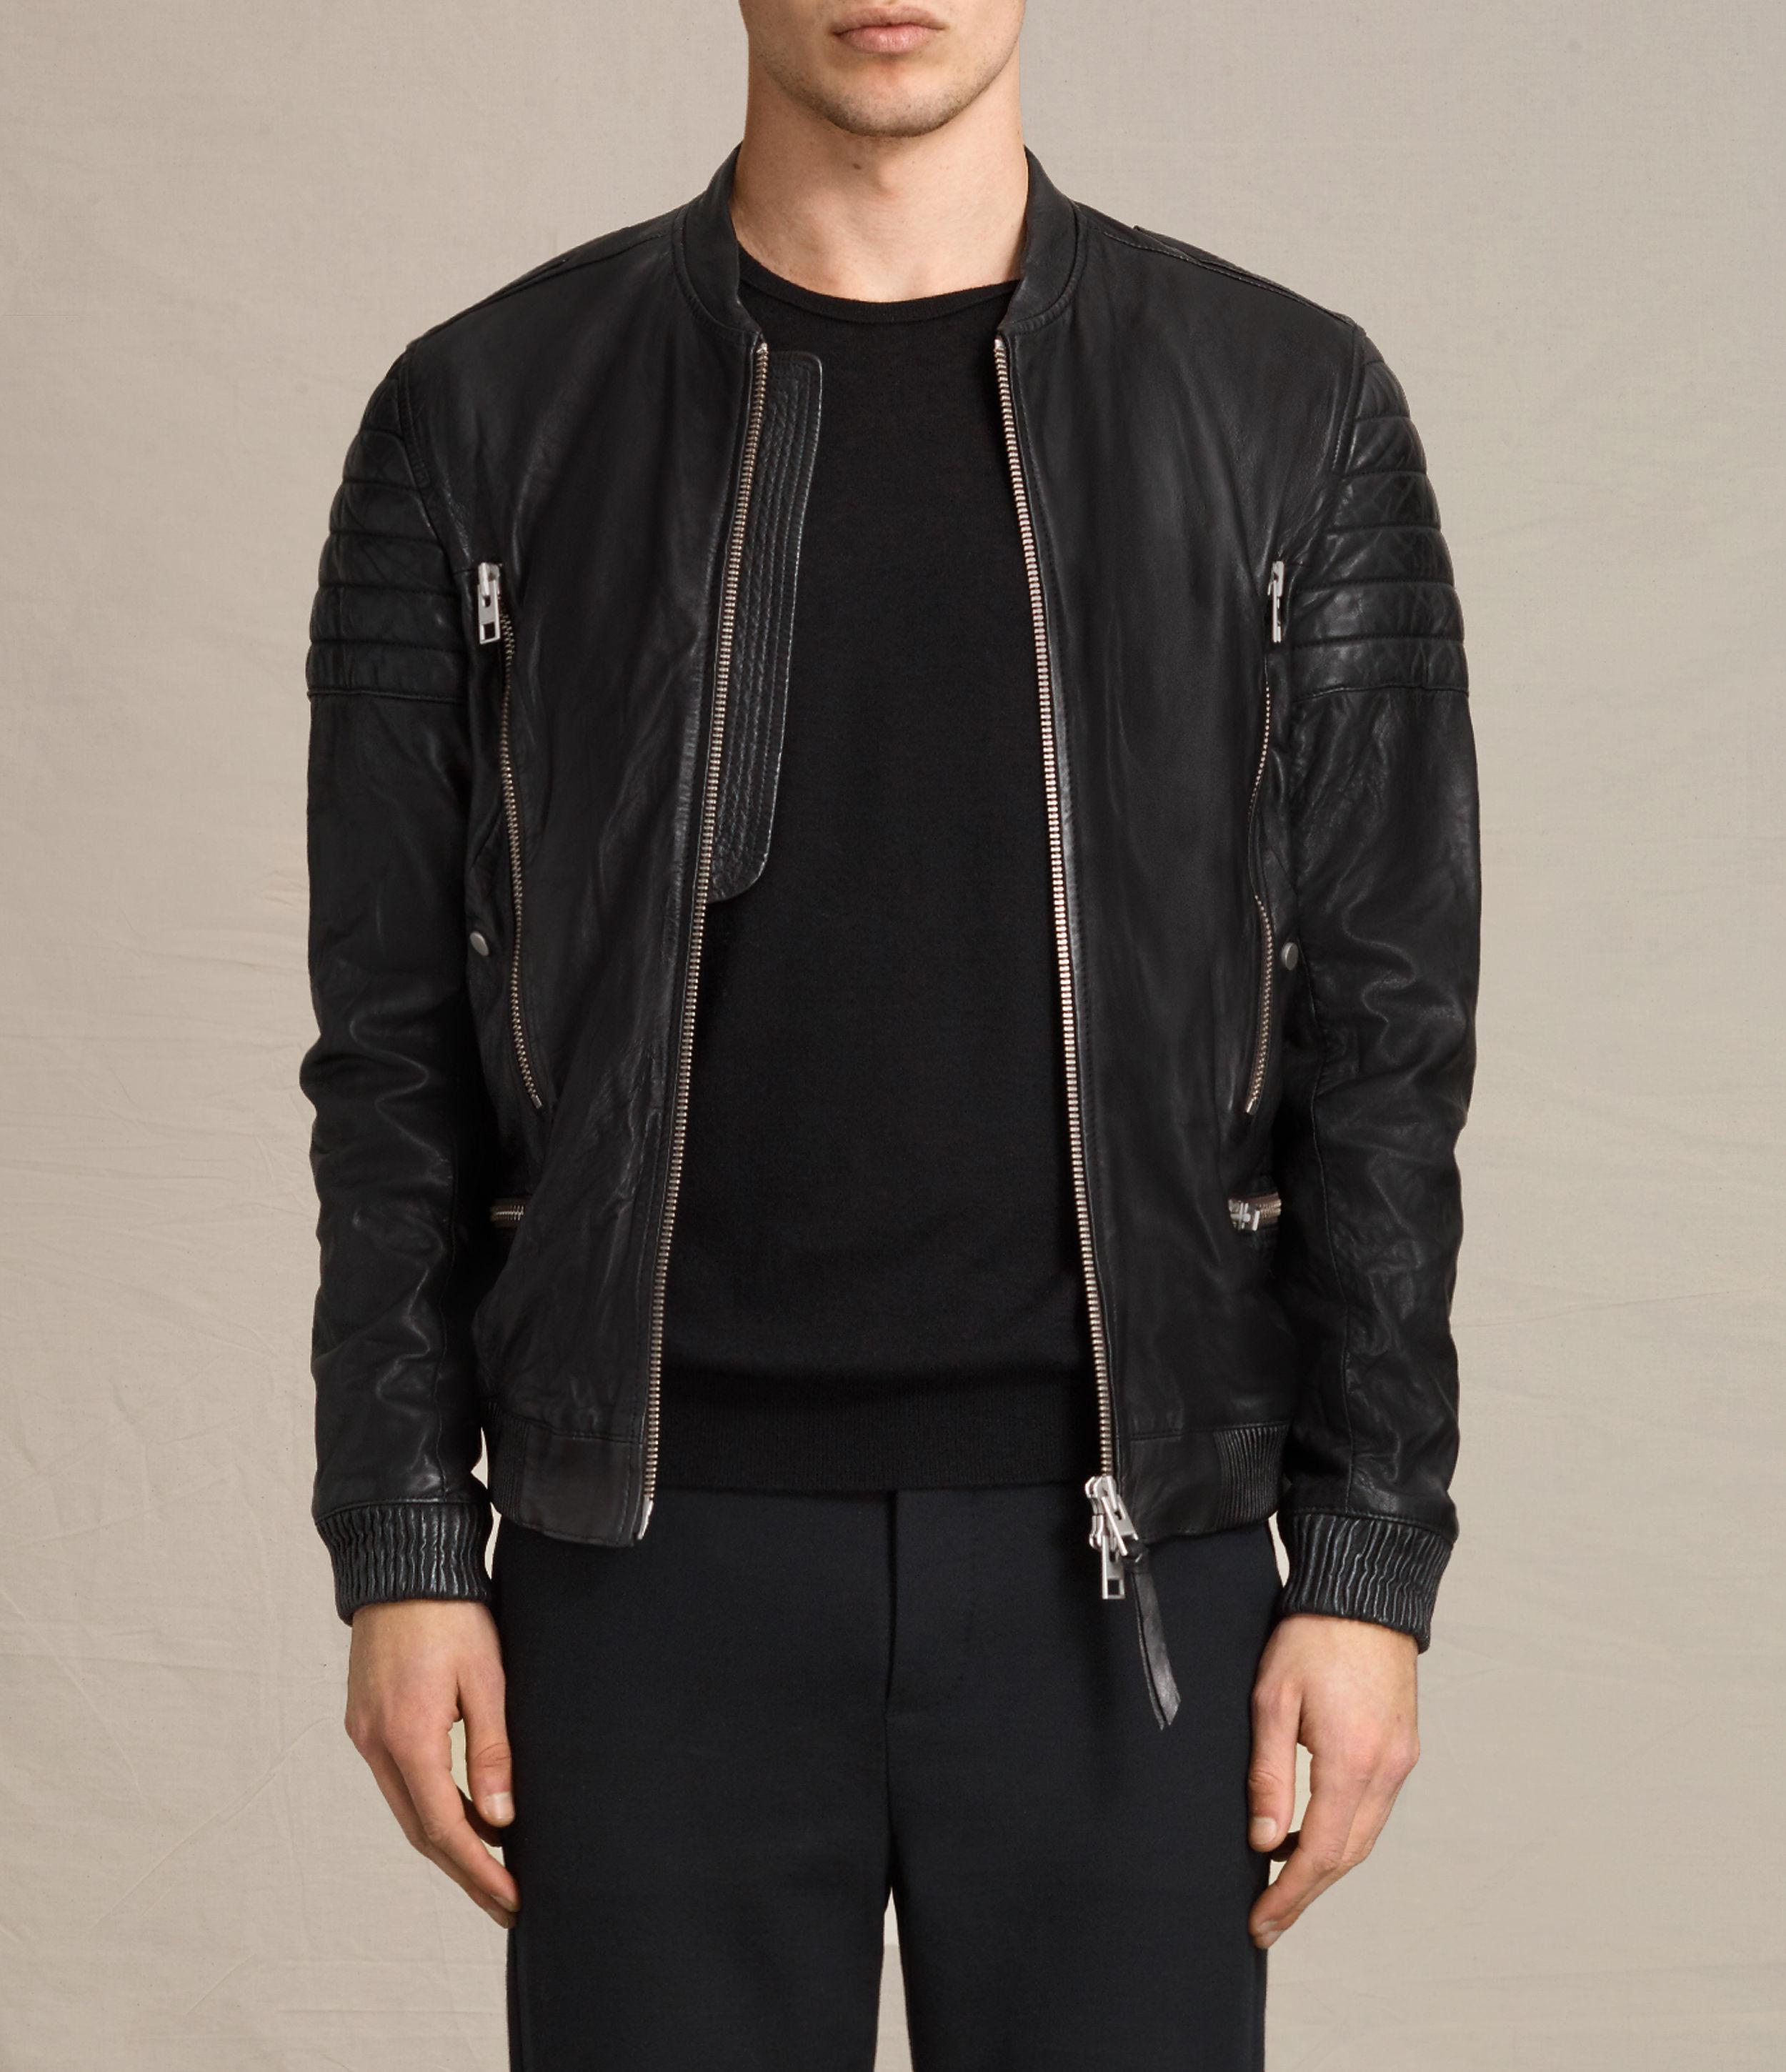 Lyst - Allsaints Sanderson Leather Bomber Jacket in Black for Men